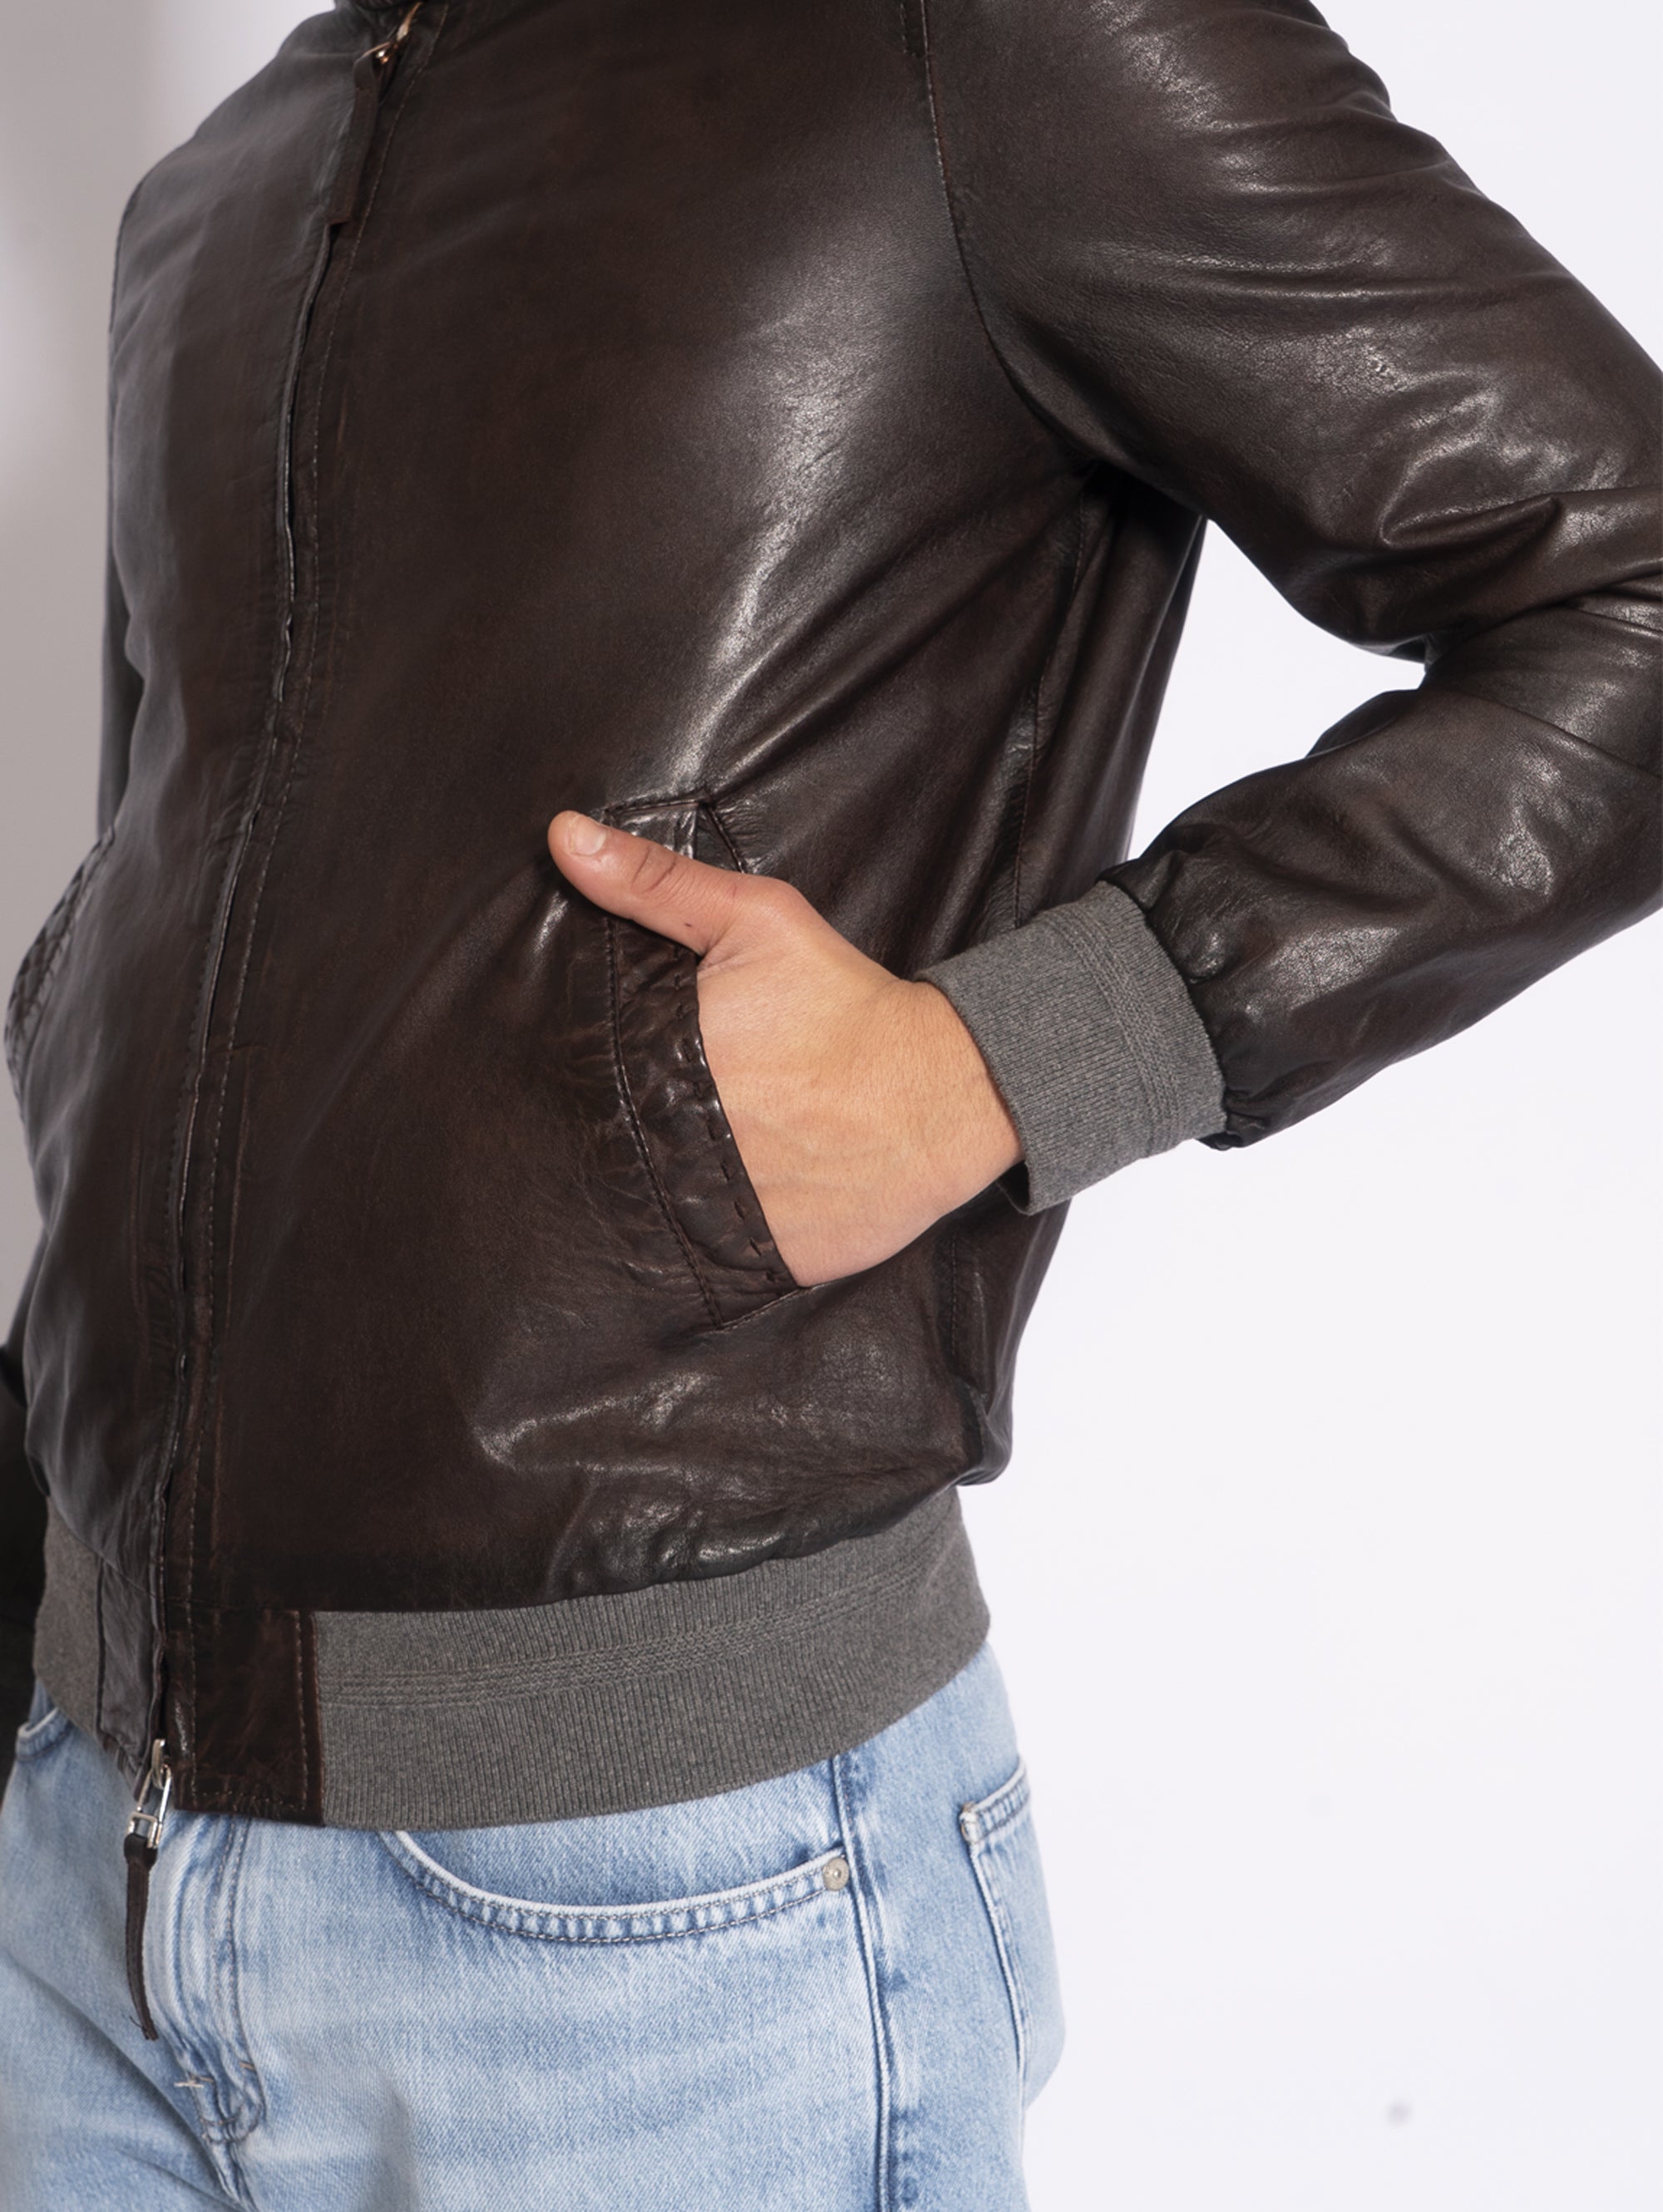 Harrington-Jacke aus dunkelbraunem Leder